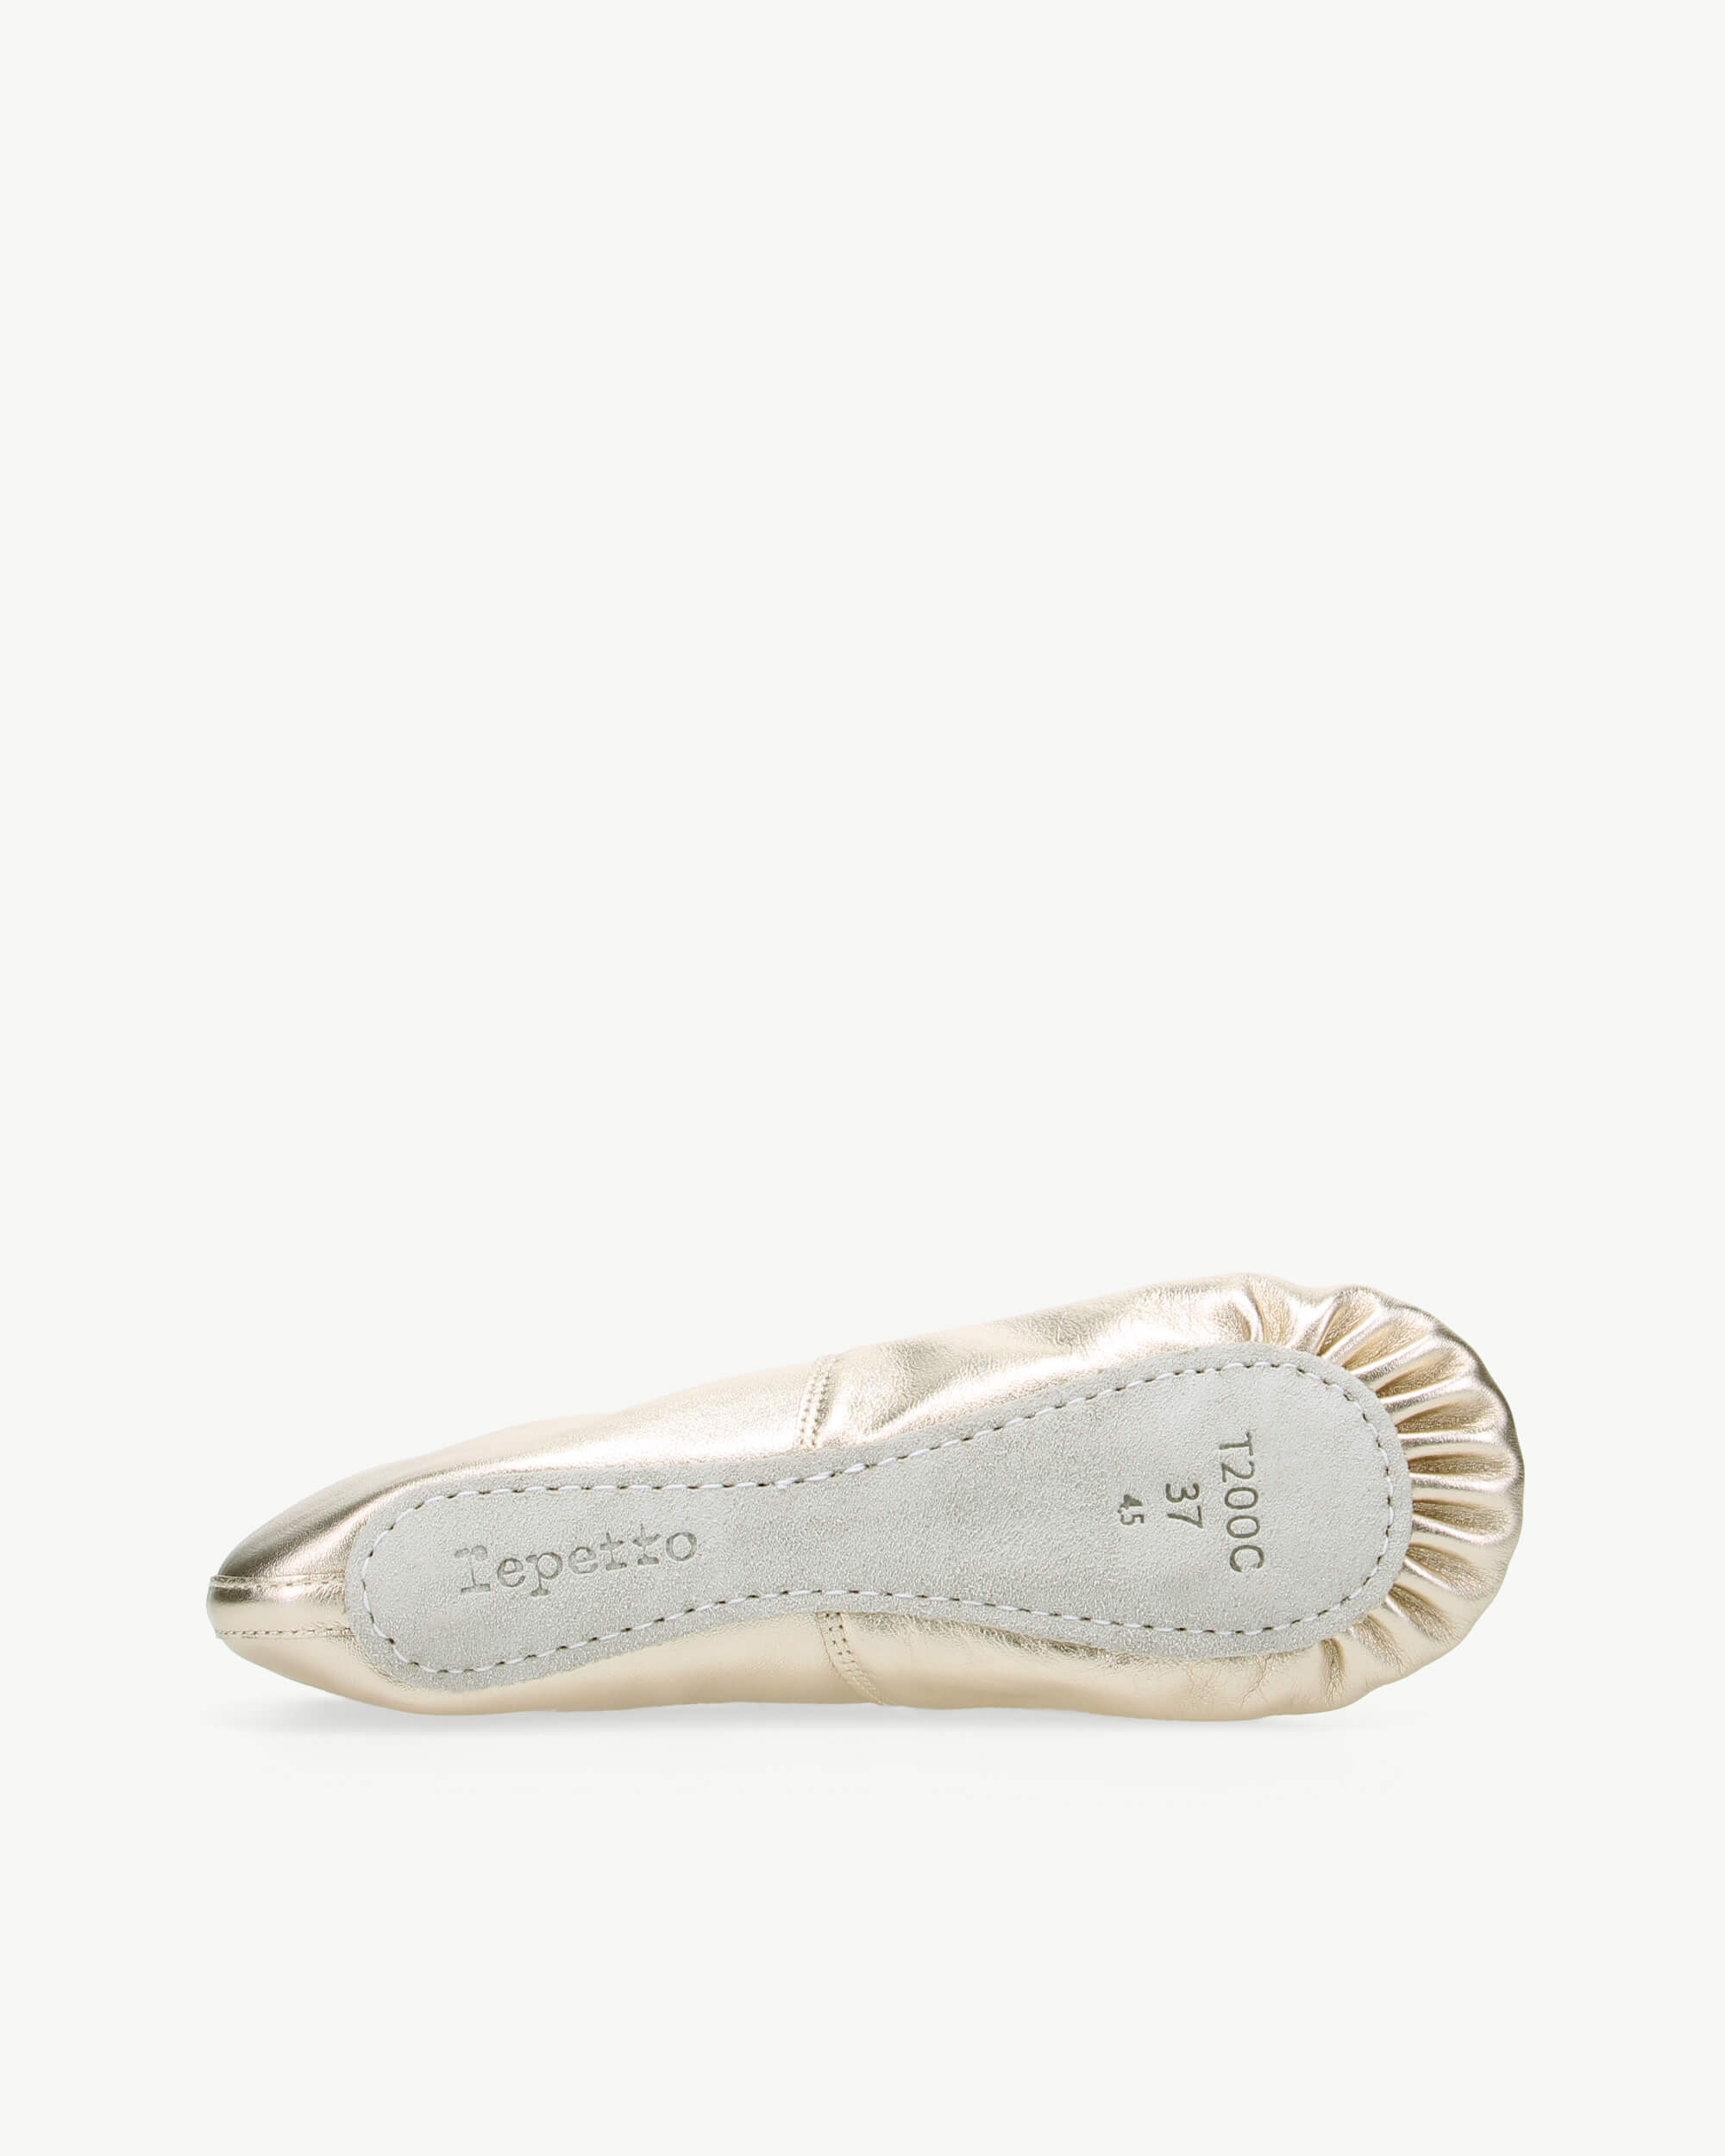 Leather soft ballet shoes - Repetto x Villa Magnan